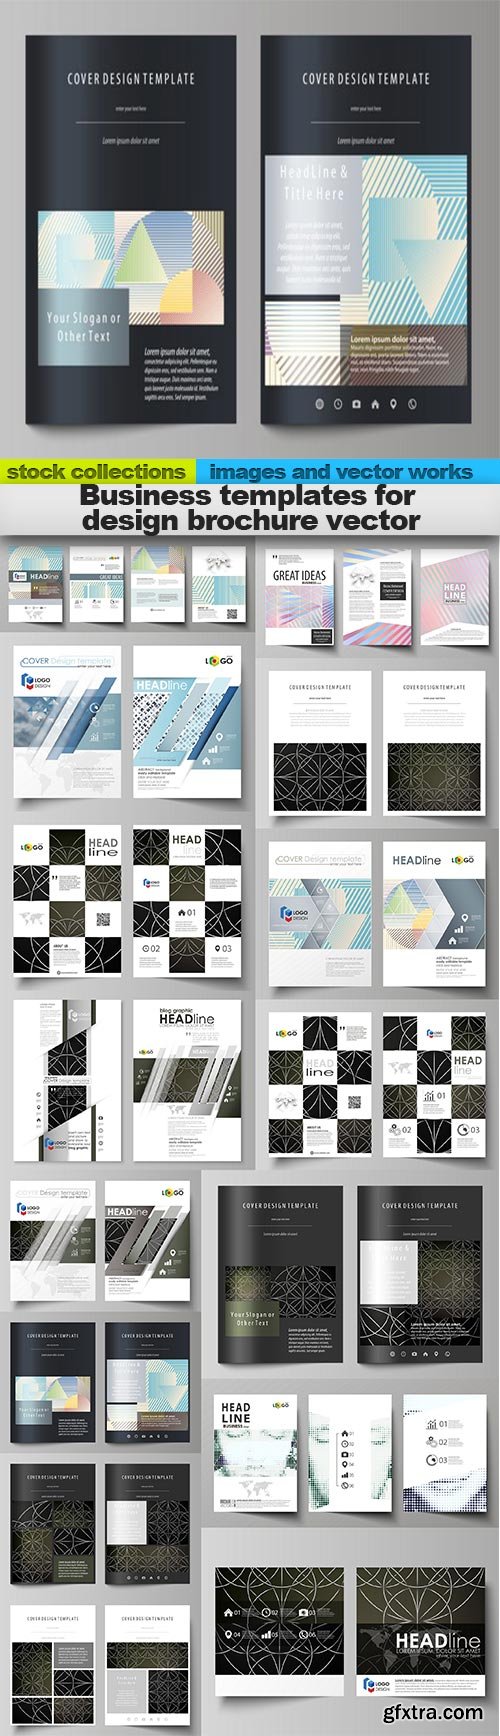 Business templates for design brochure vector, 15 x EPS